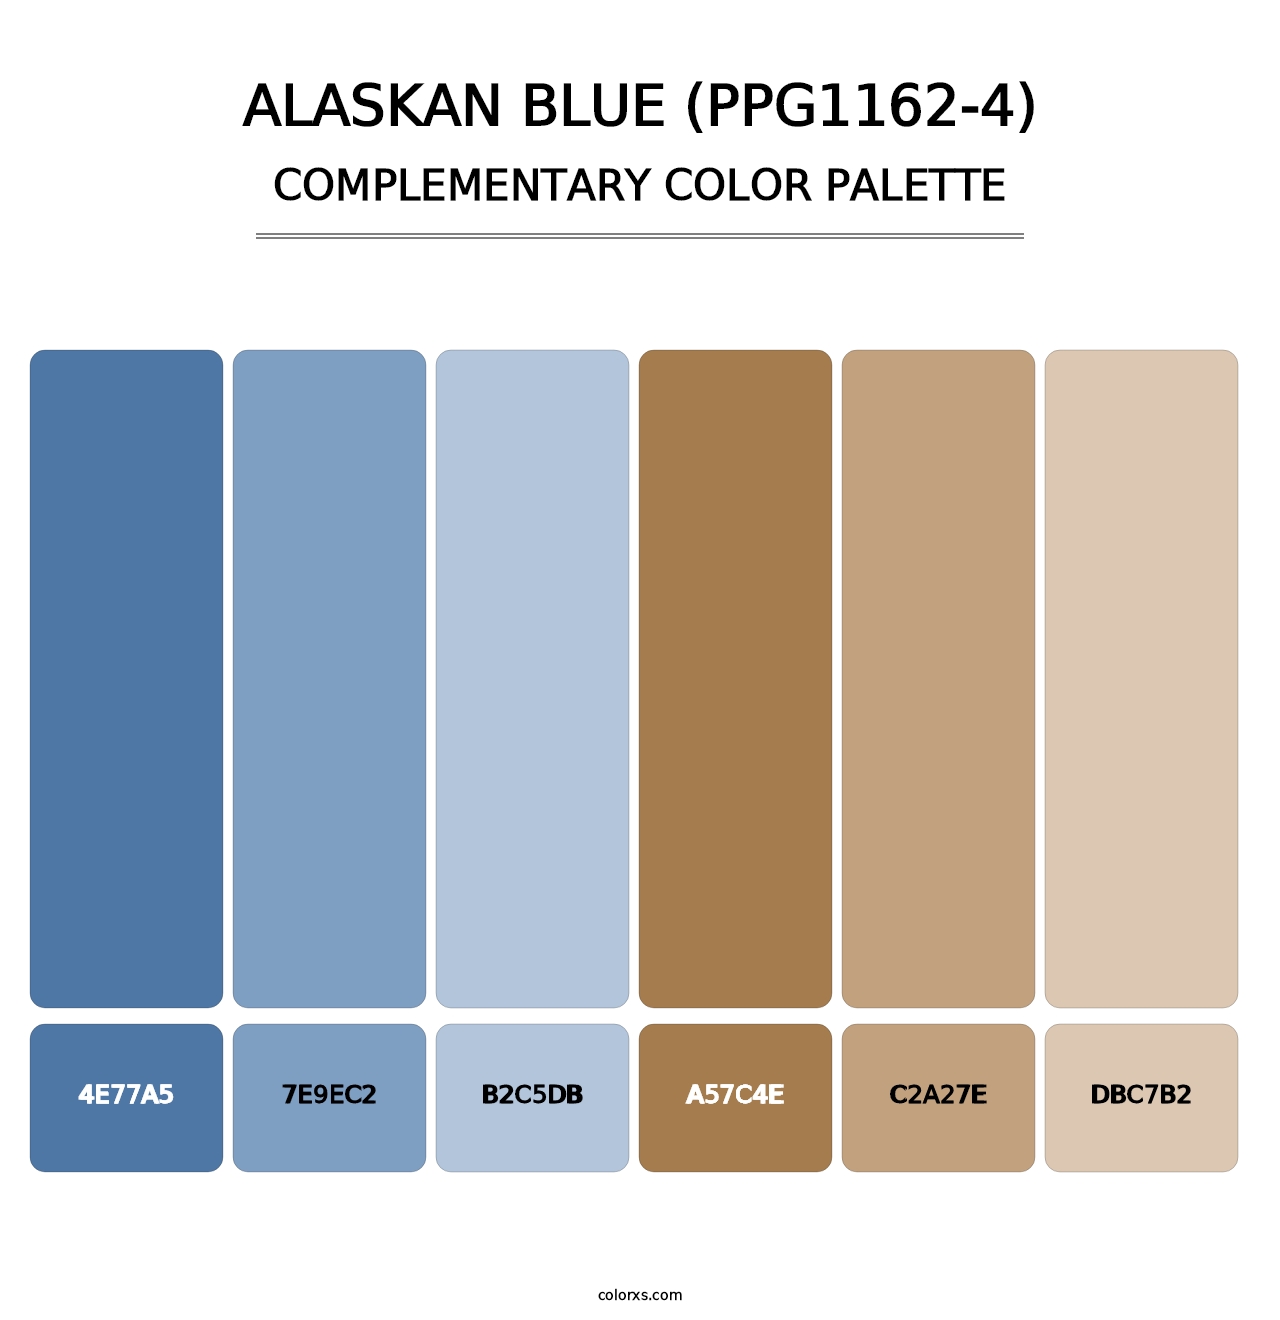 Alaskan Blue (PPG1162-4) - Complementary Color Palette